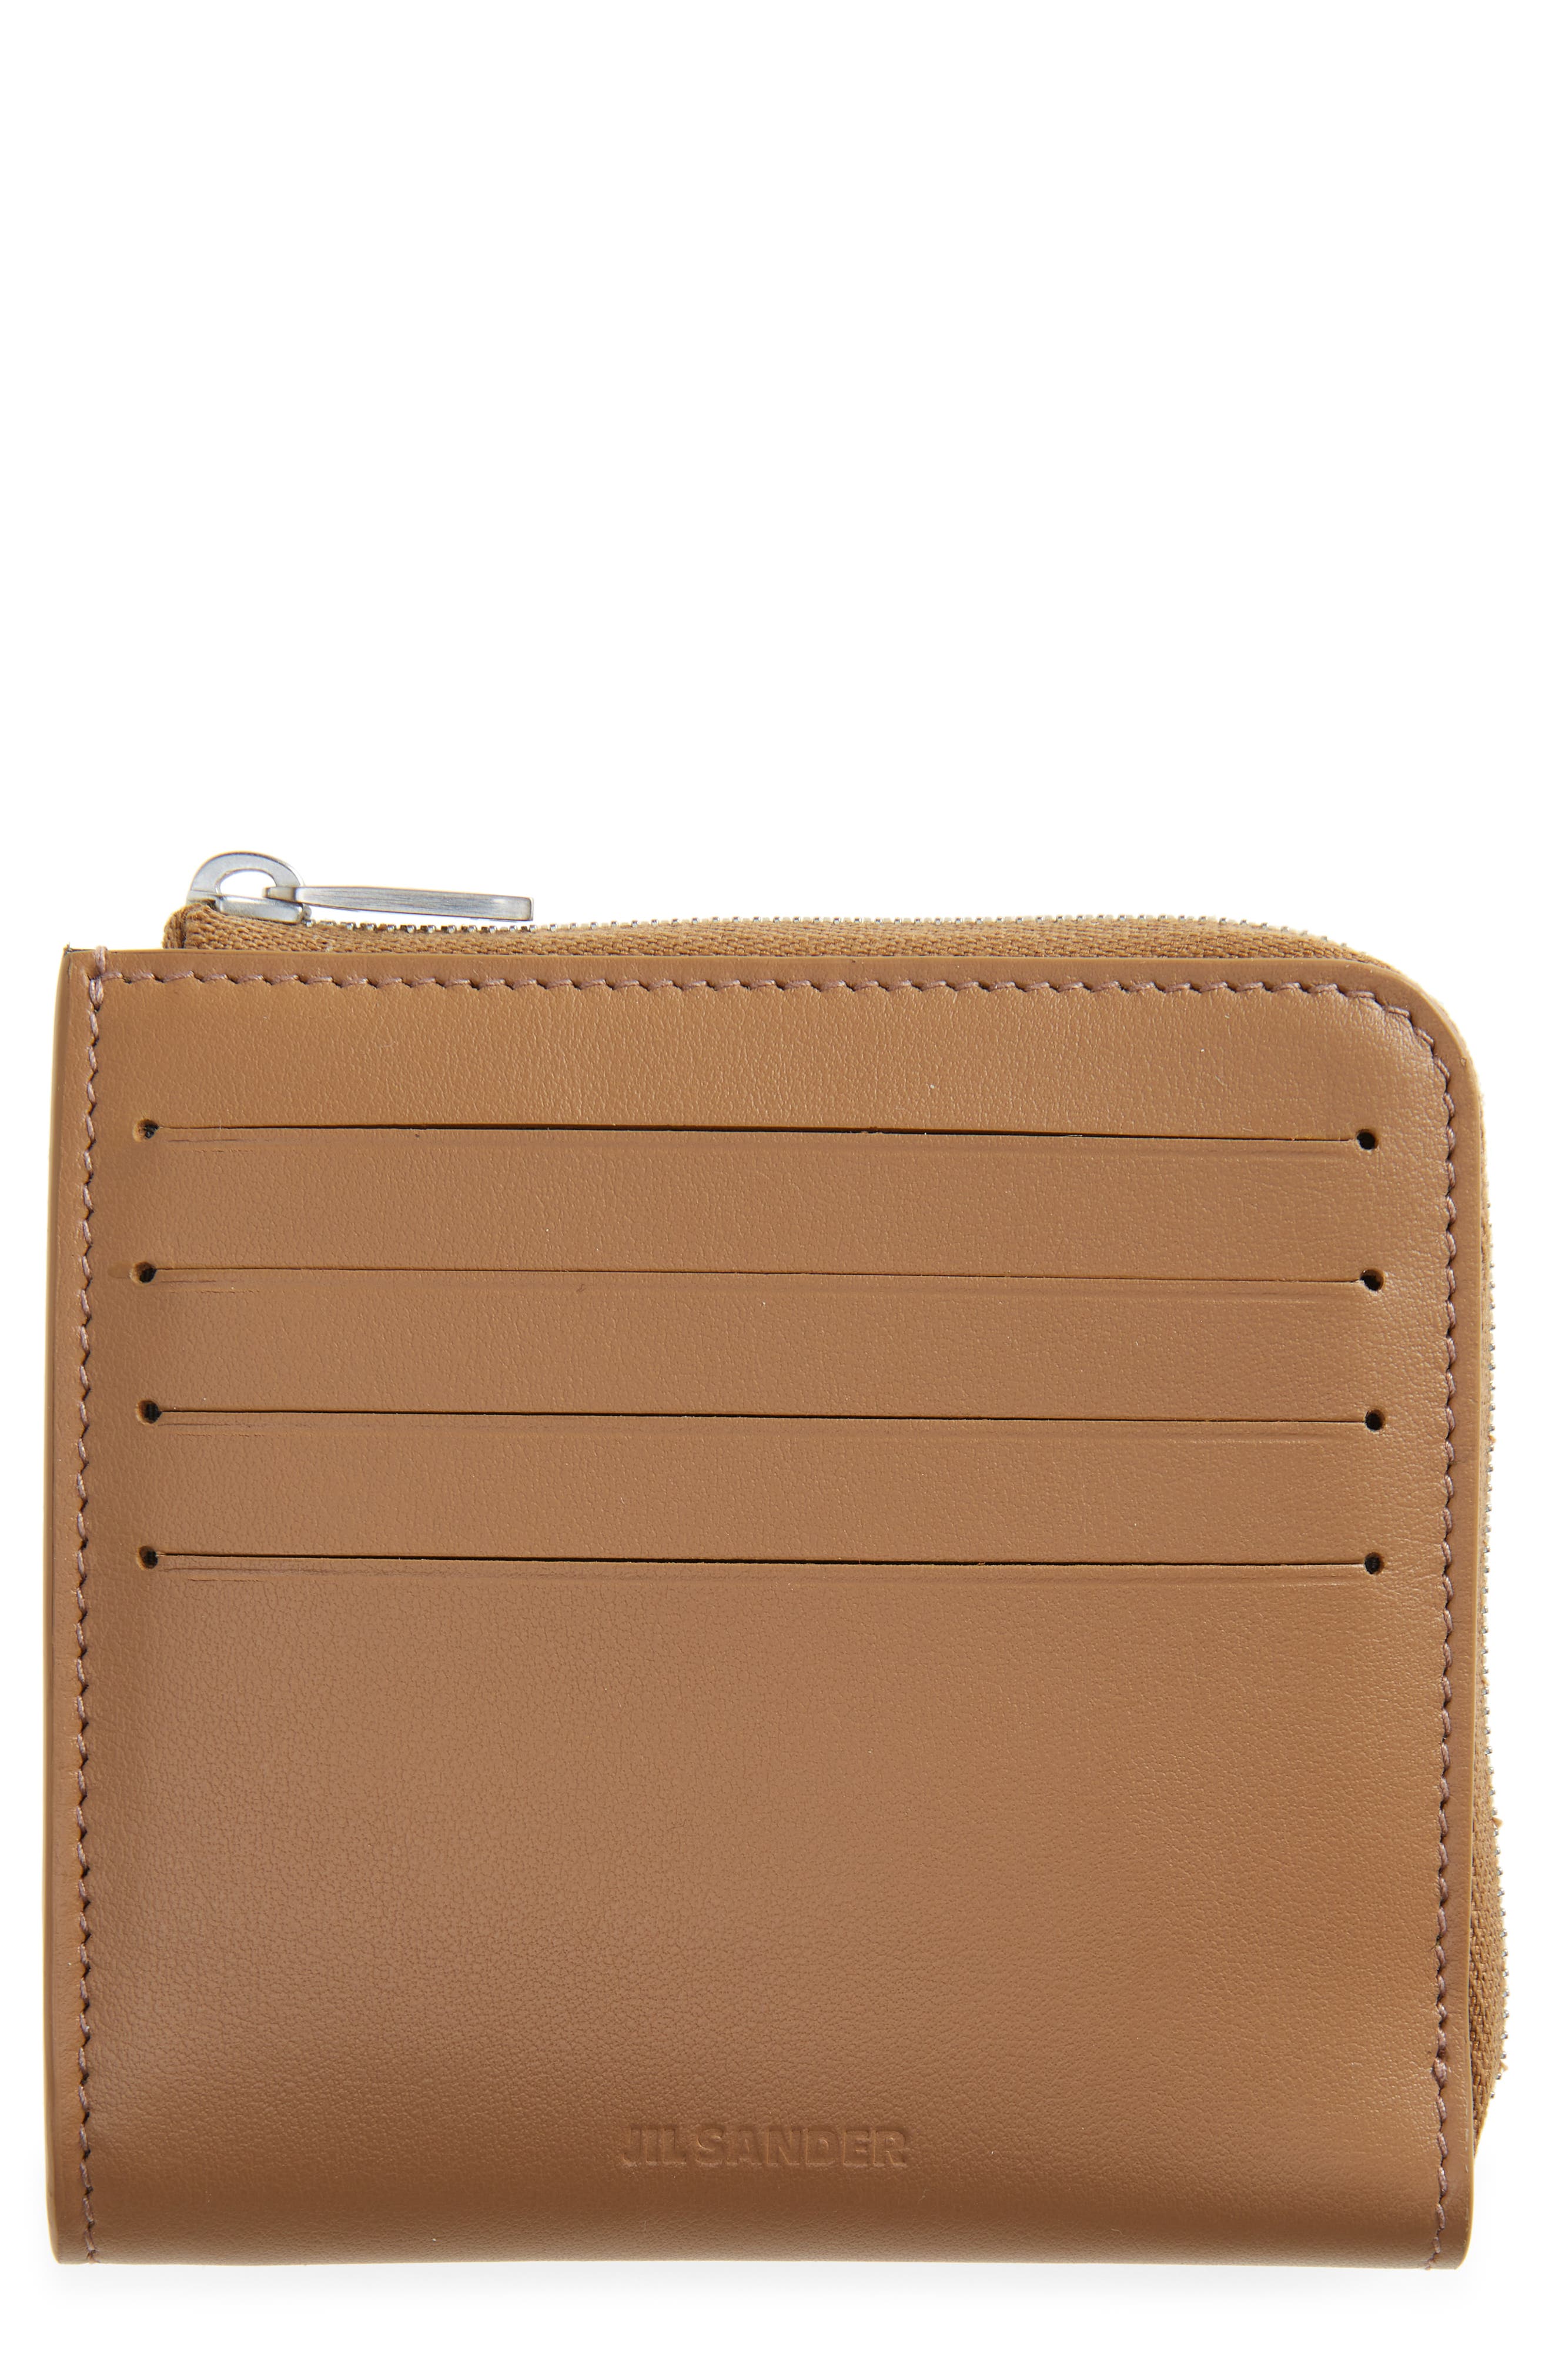 Jil Sander Zip Around Leather Wallet | Nordstrom